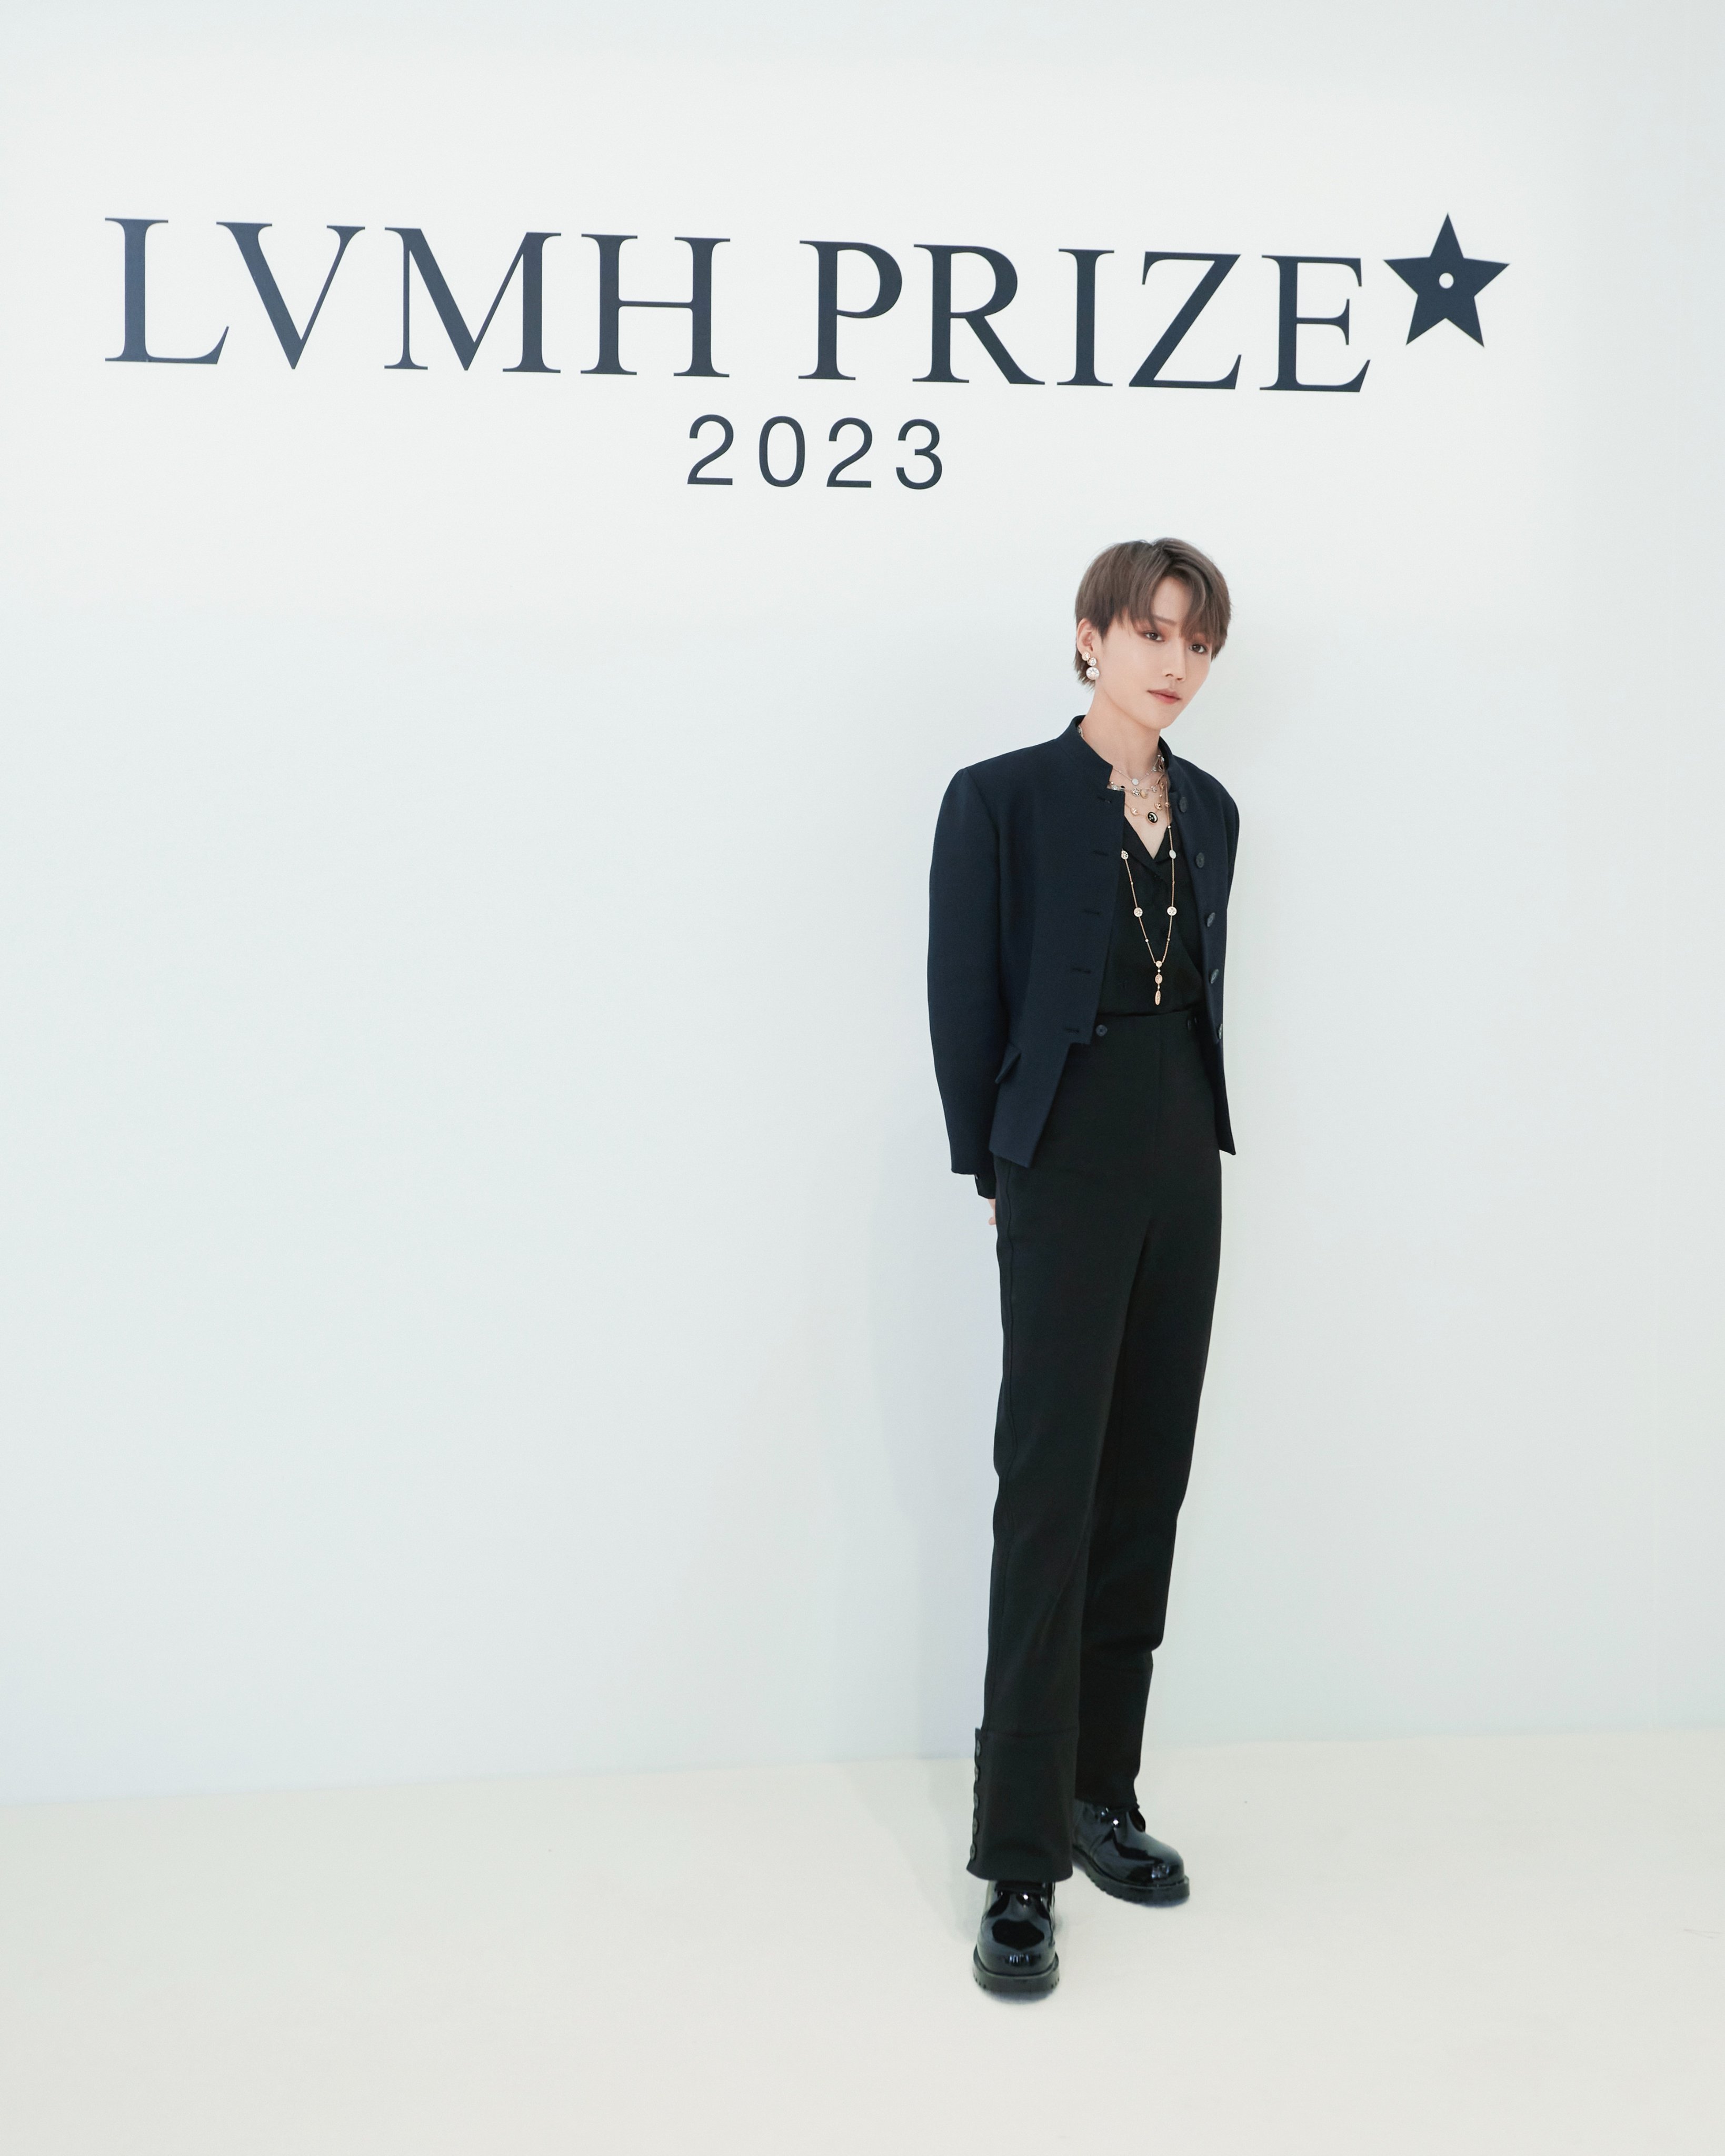 lvmh prize 2023